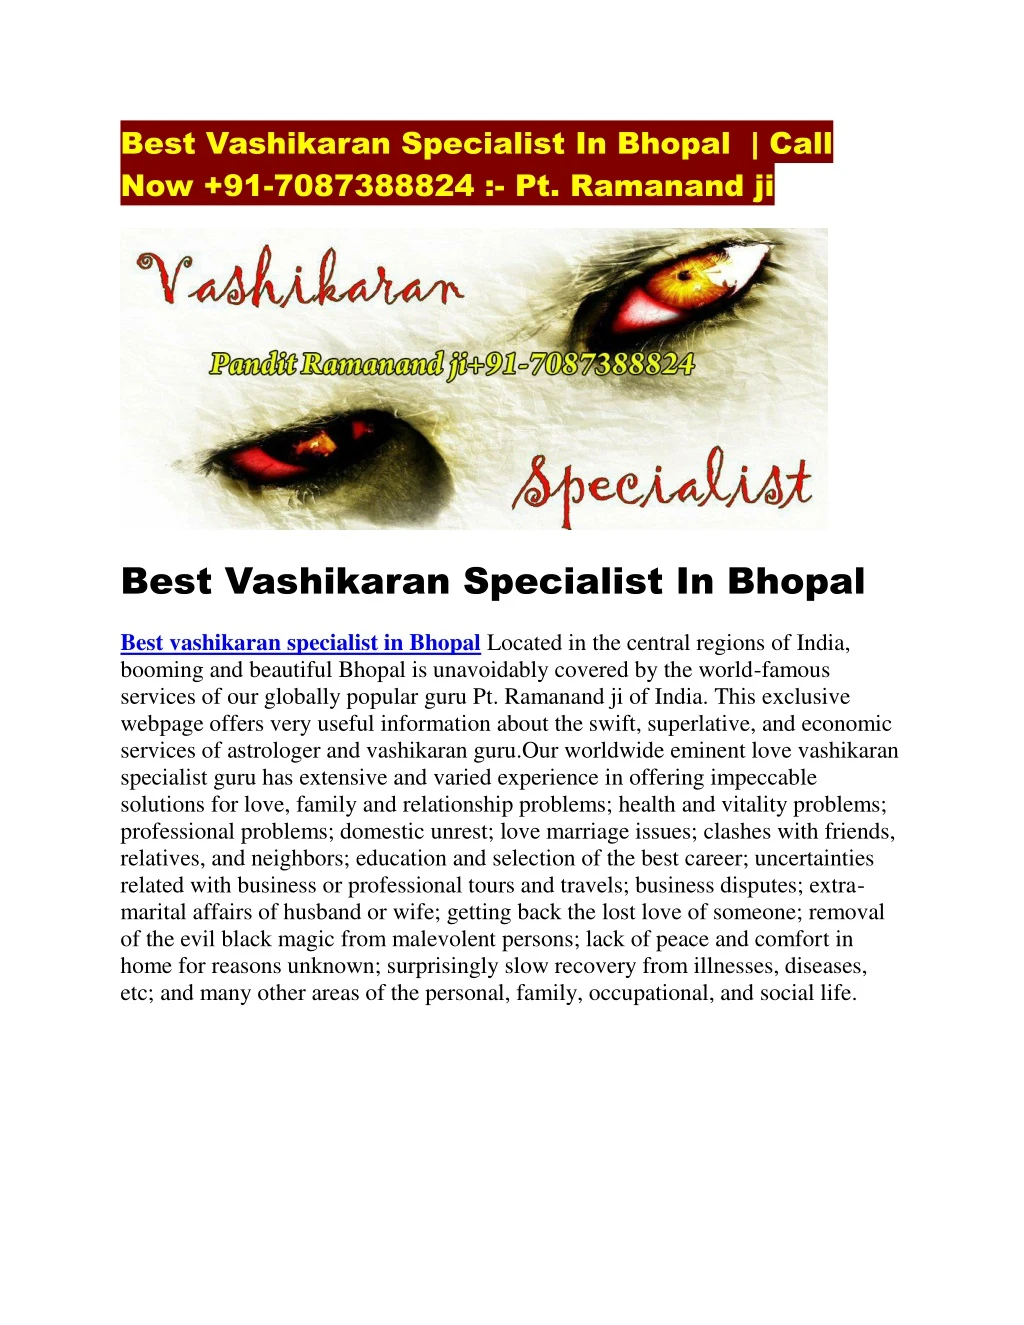 best vashikaran specialist in bhopal call